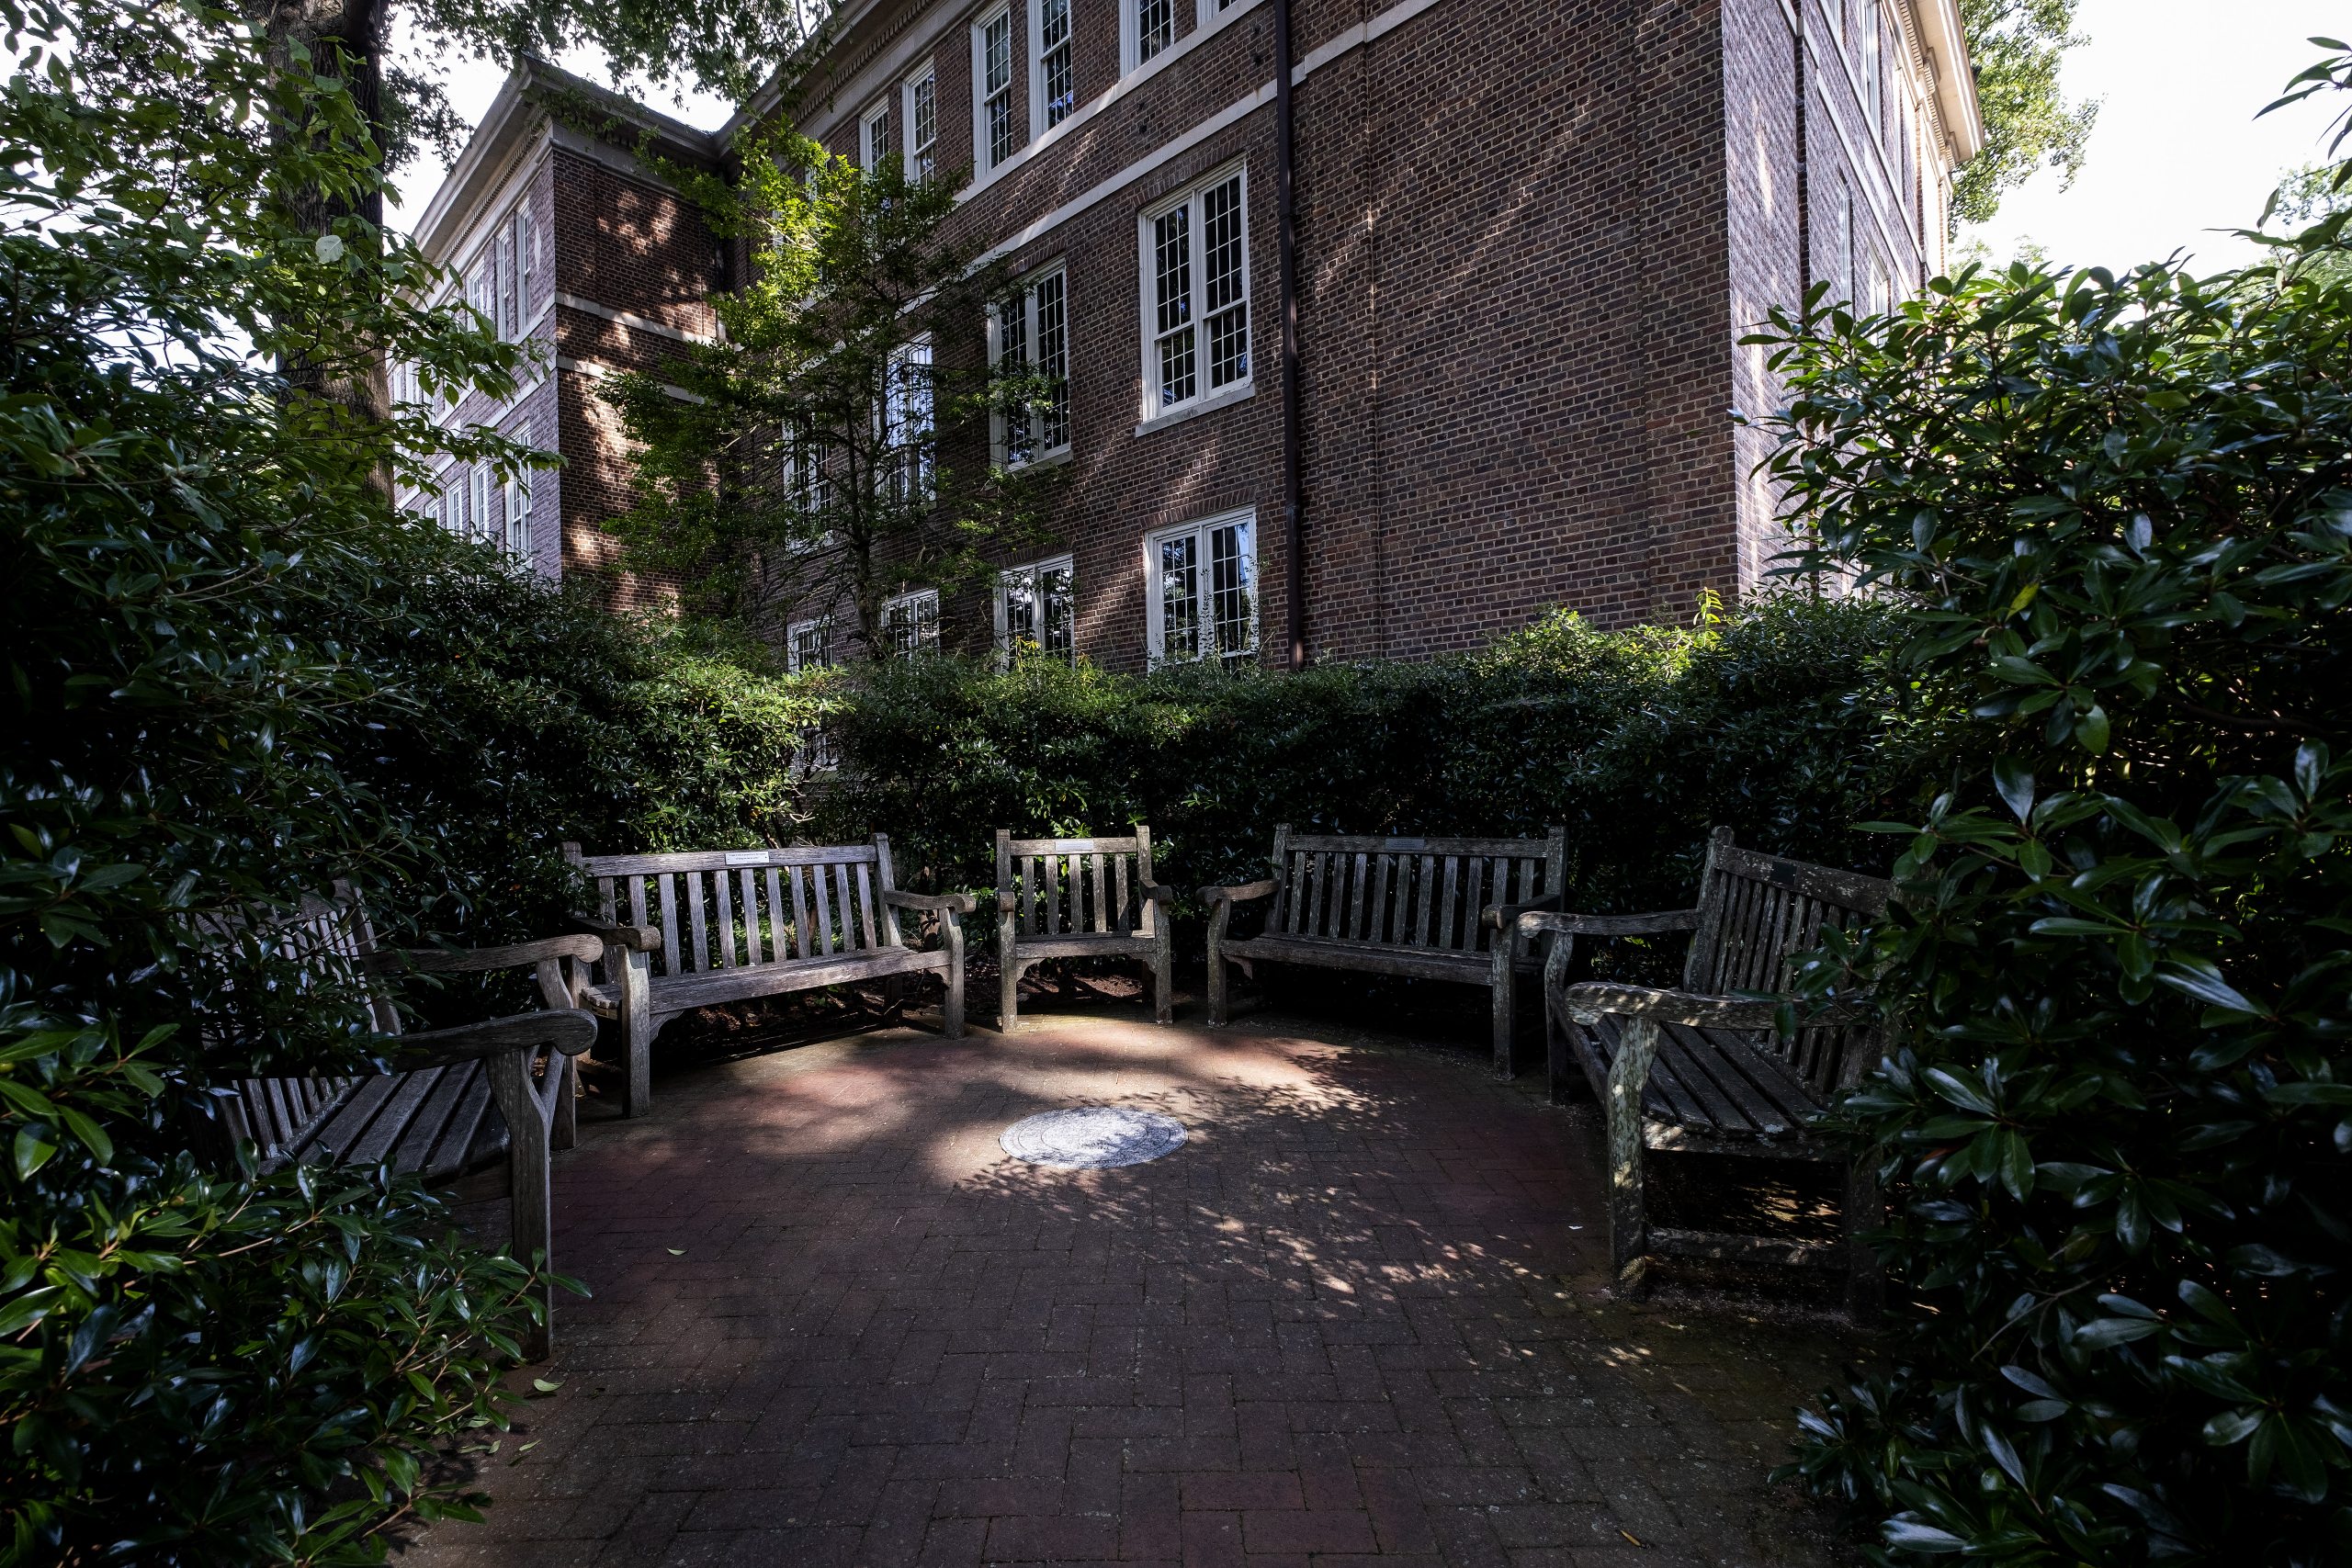 Scene at circle of benches near Carolina Hall on the campus of the University of North Carolina at Chapel Hill.